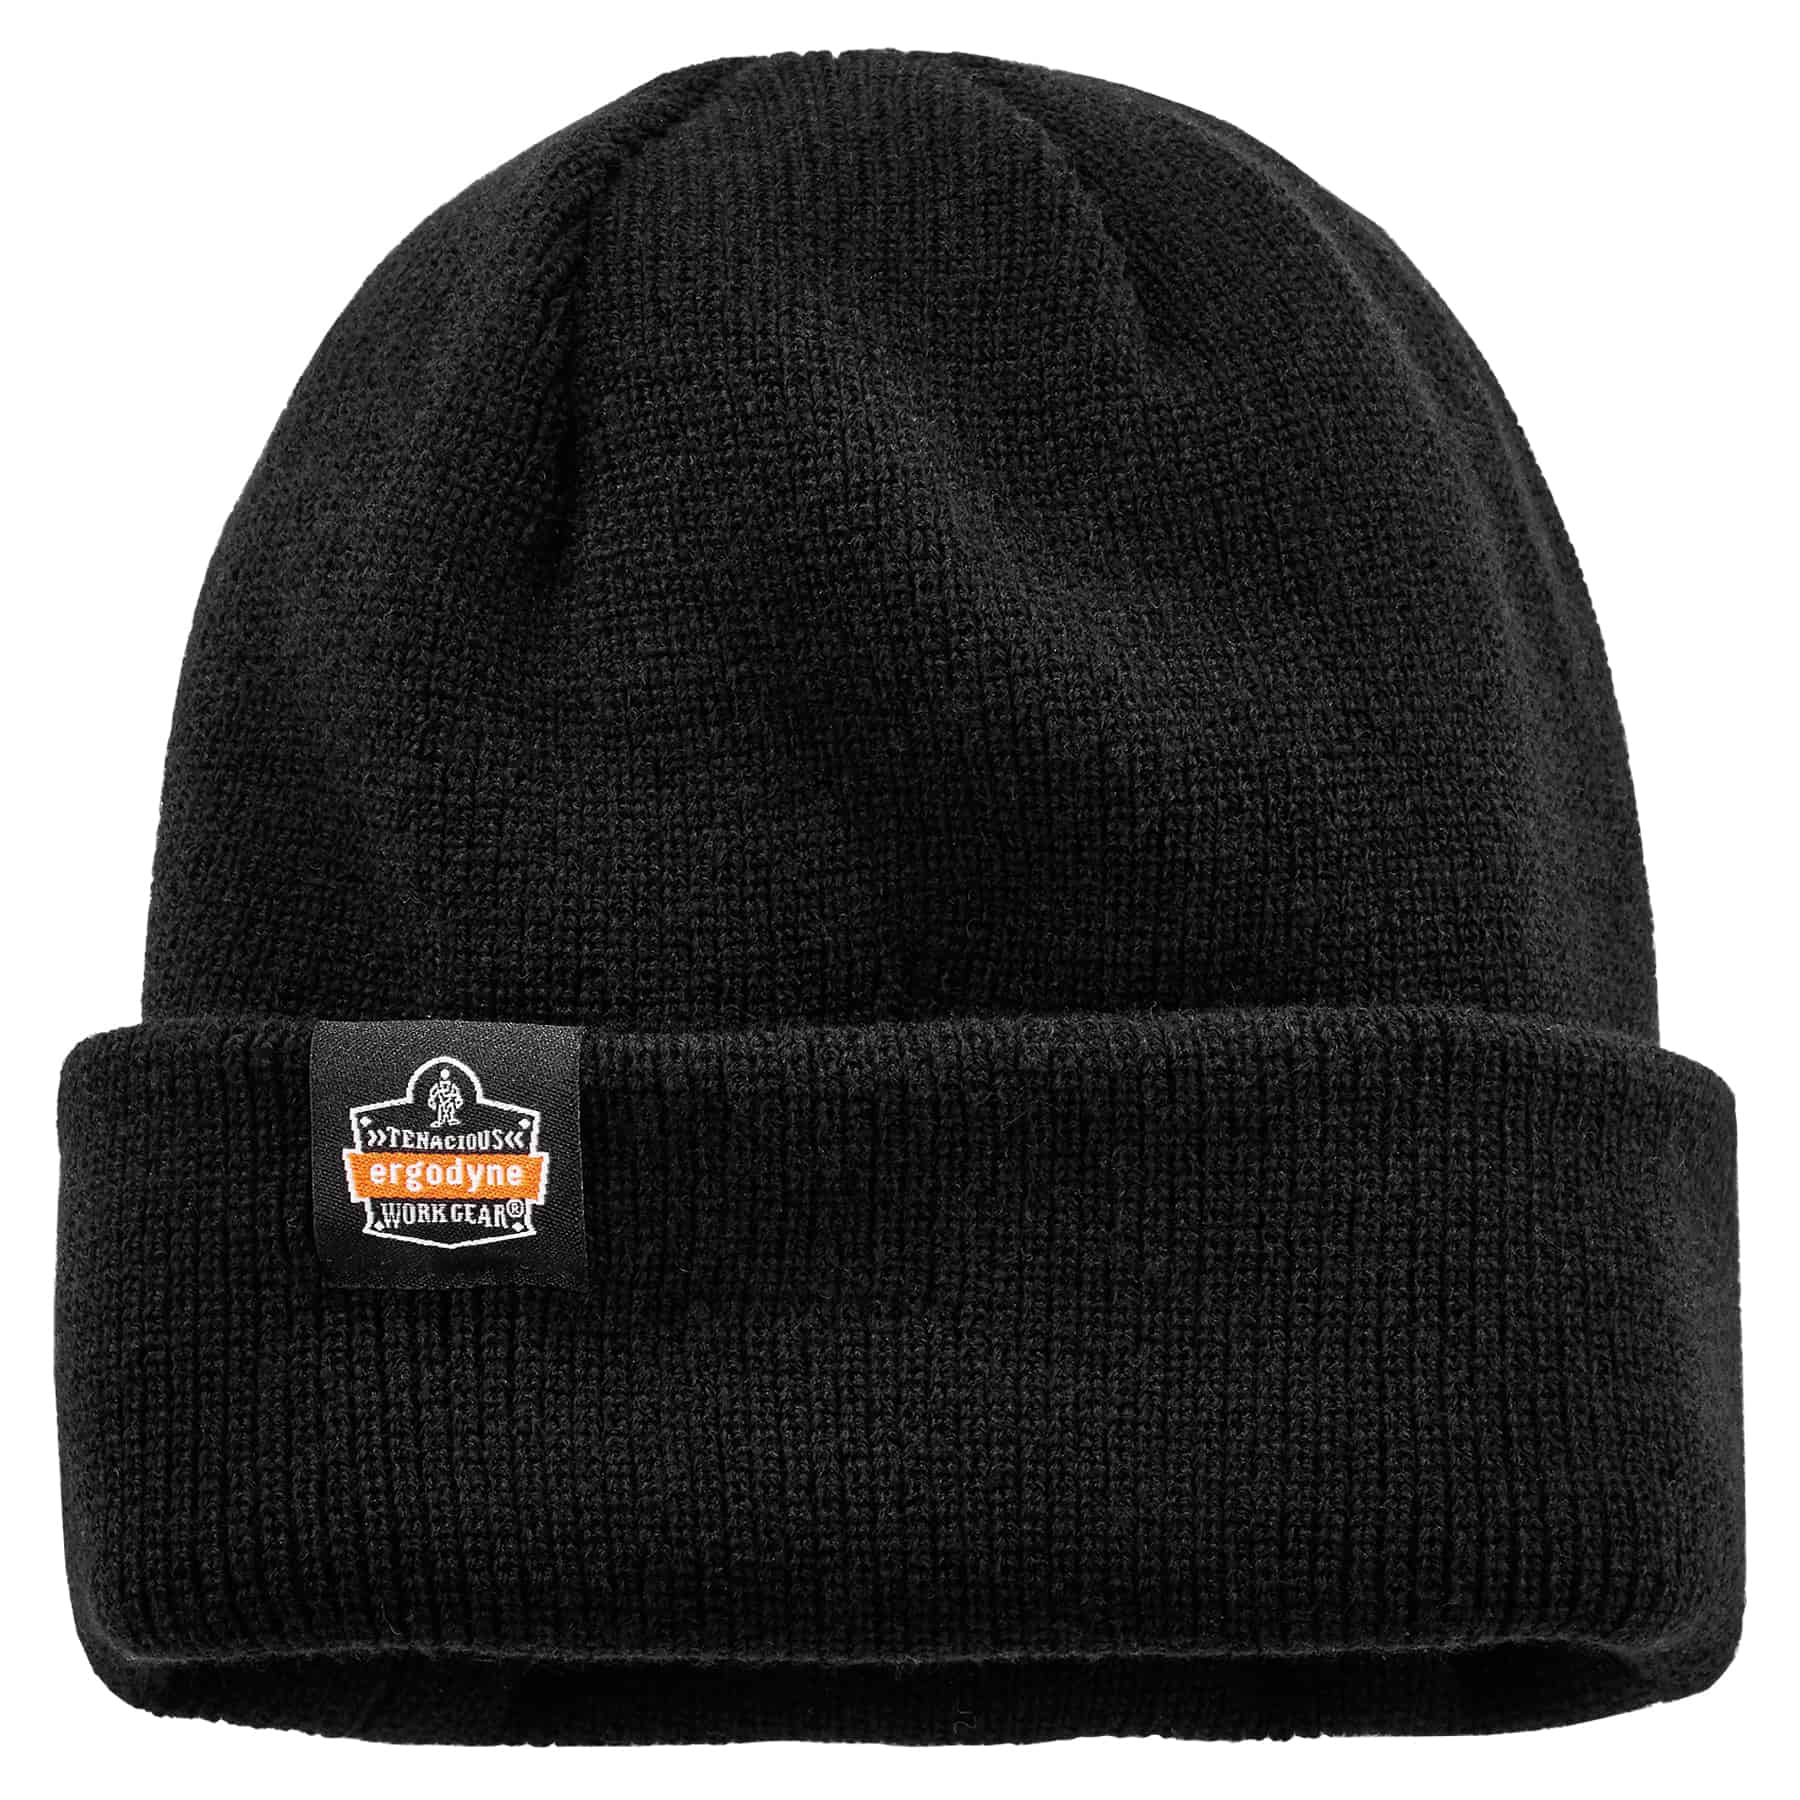 Ribbed Knit Beanie Hat with Zipper for Bump Cap Insert | Ergodyne